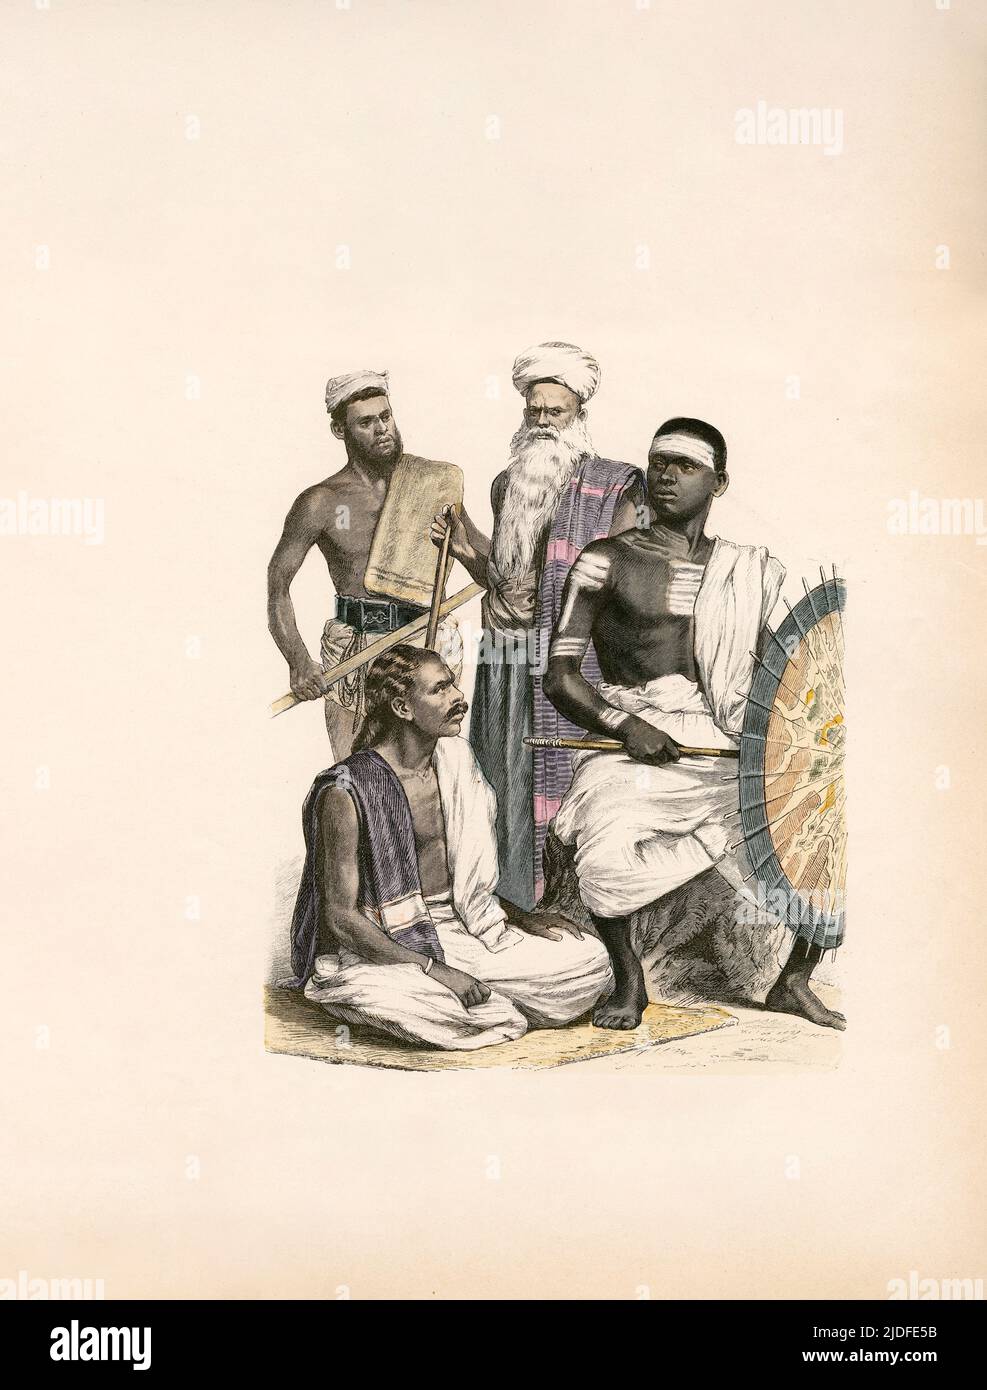 Coolie, Muham, Kling (Tjetti), Late 19th Century, Illustration, The History of Costume, Braun & Schneider, Munich, Germany, 1861-1880 Stock Photo